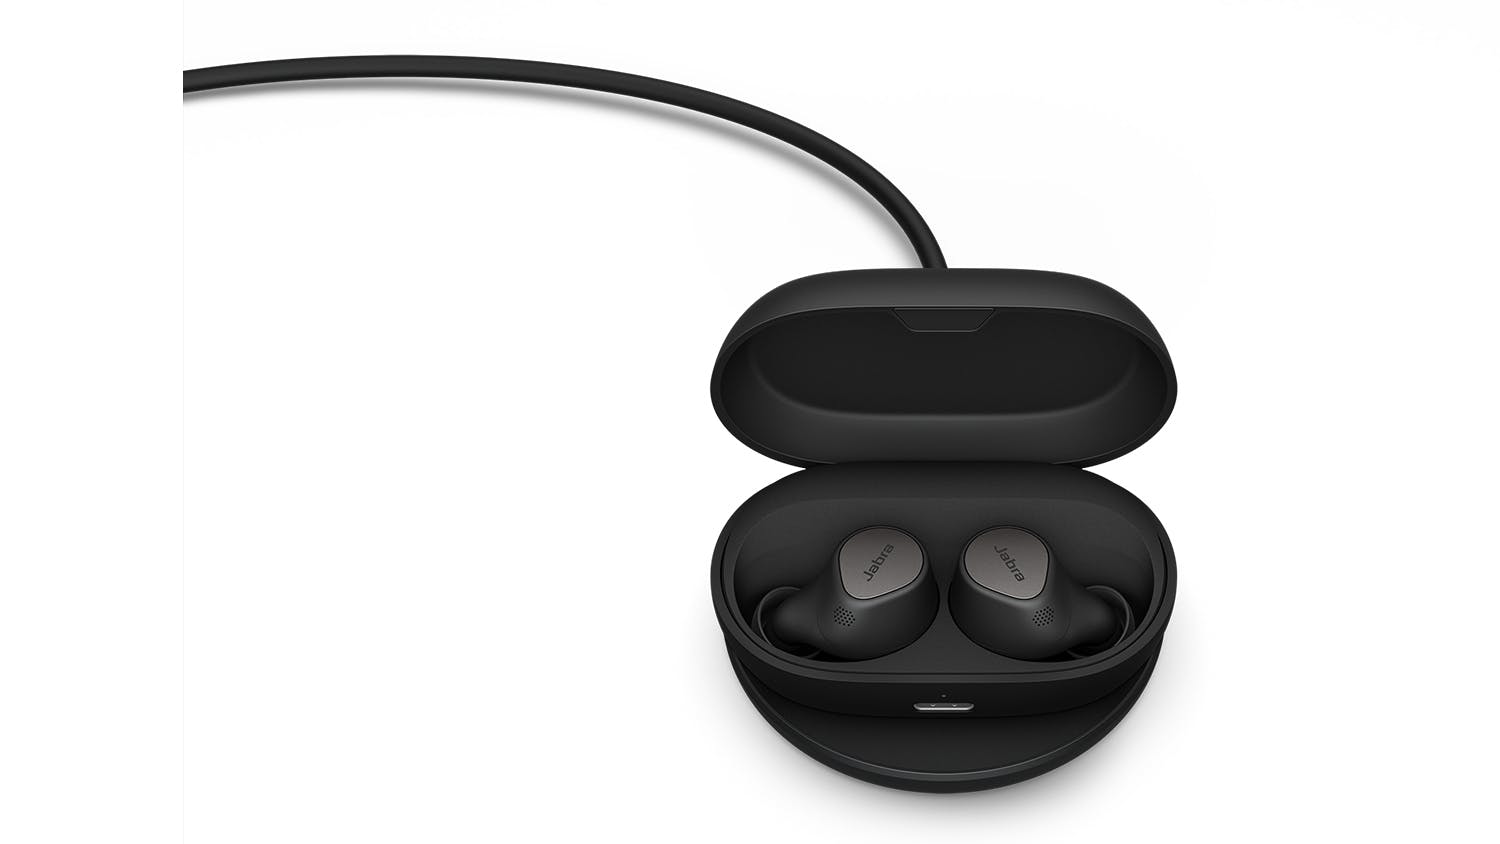 Right ear ONLY Jabra Elite 7 Pro wireless Bluetooth earbuds headphones  (black) R